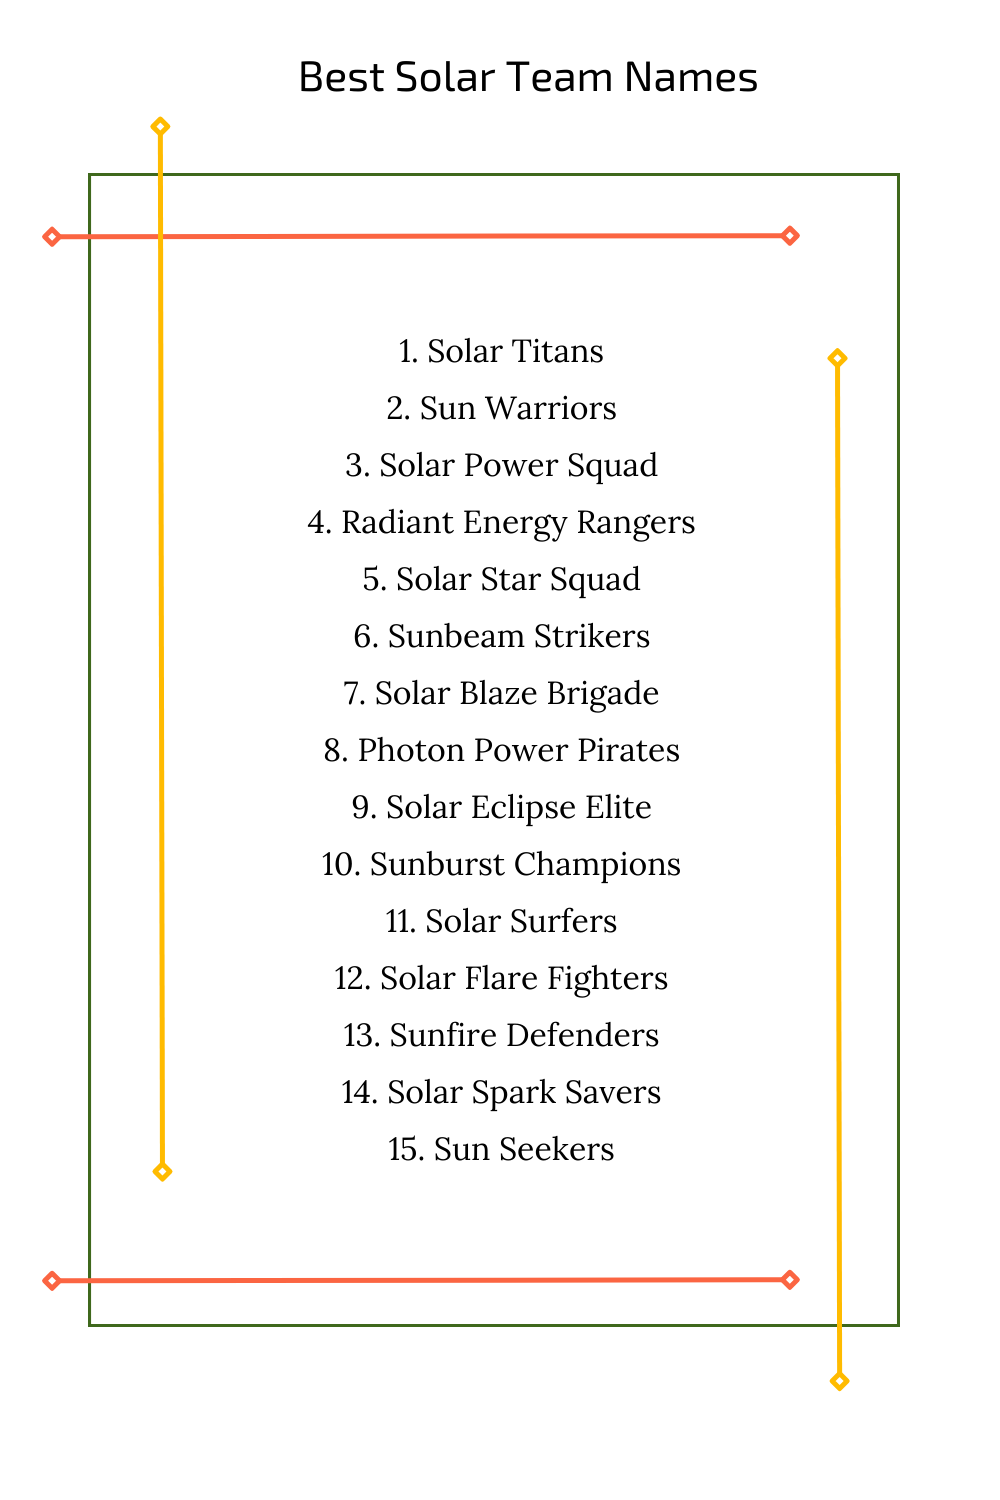 Best Solar Team Names